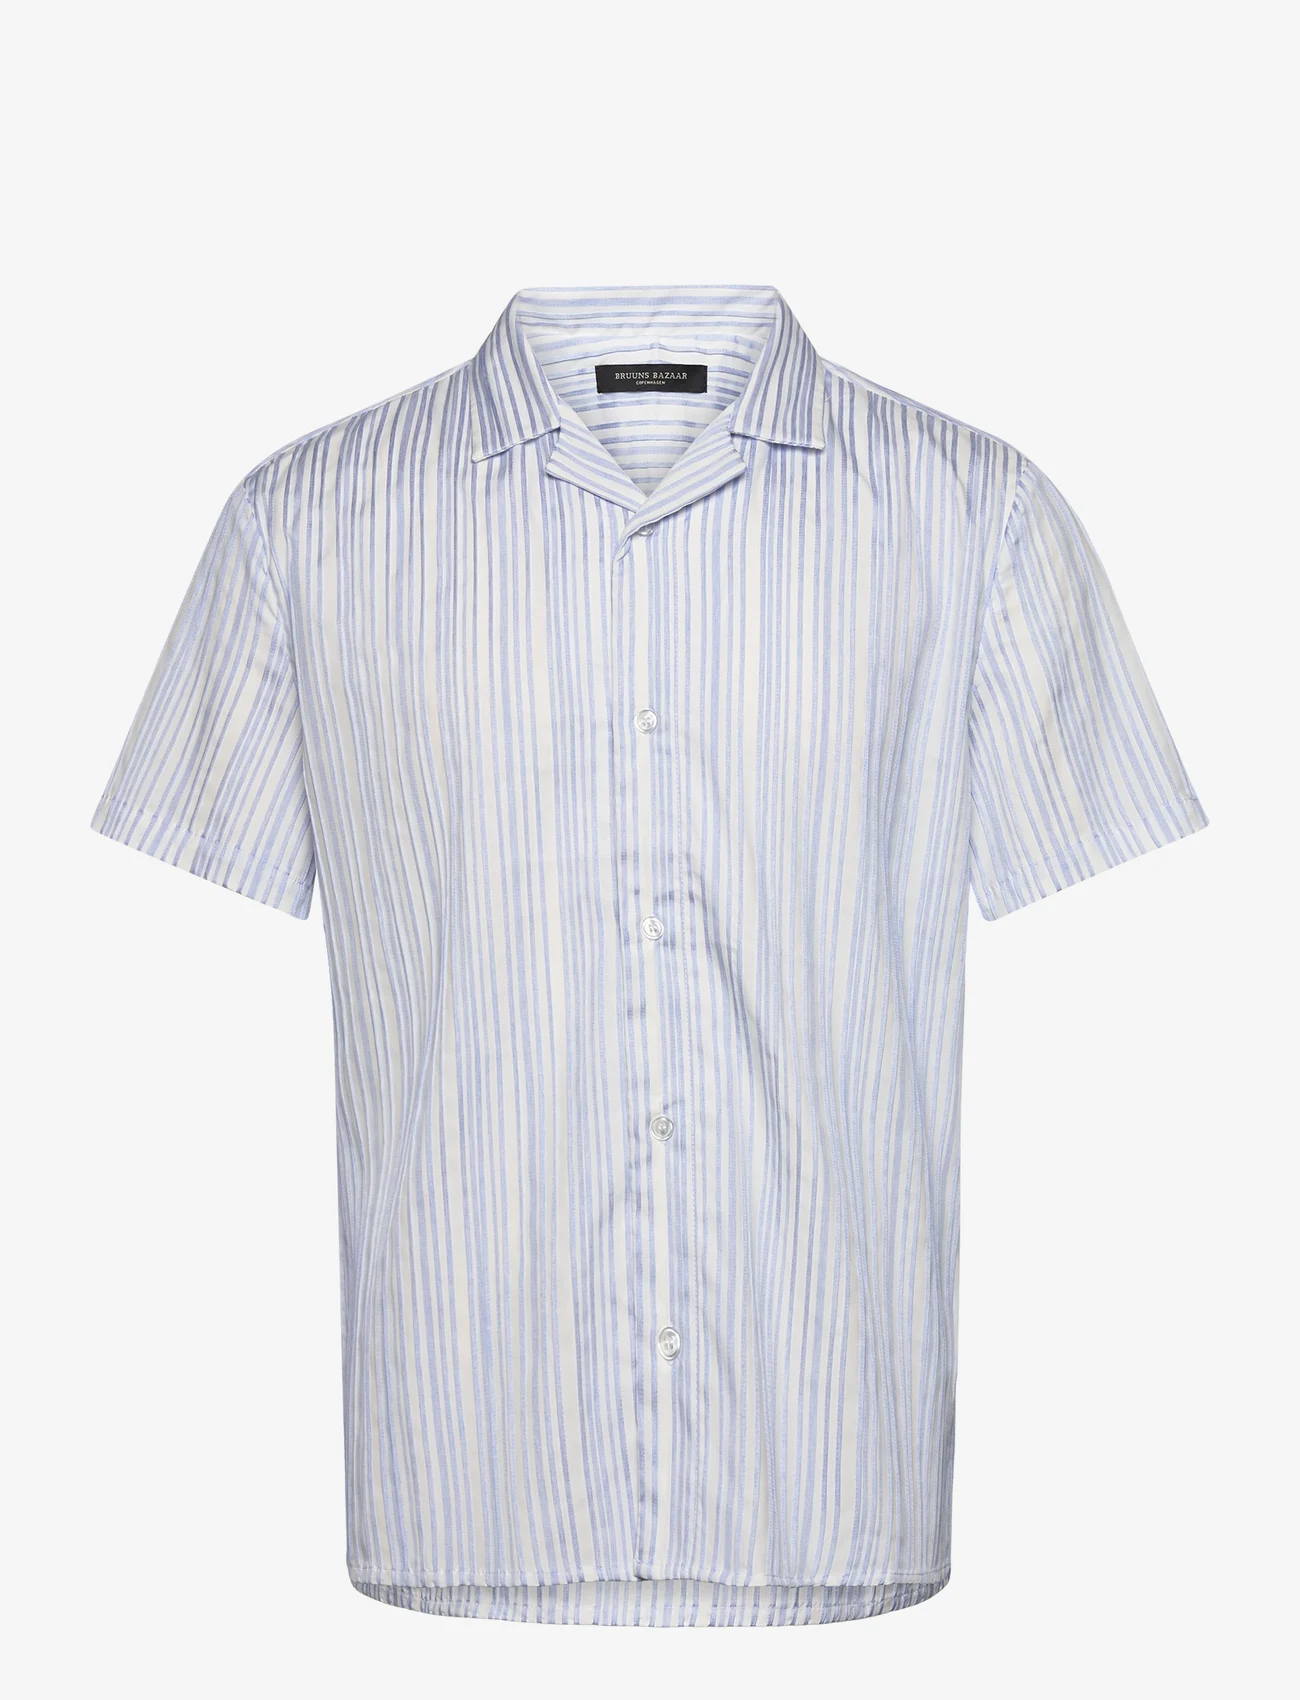 Bruuns Bazaar - DimensionBBHomme shirt - krótki rękaw - light blue stripe - 0